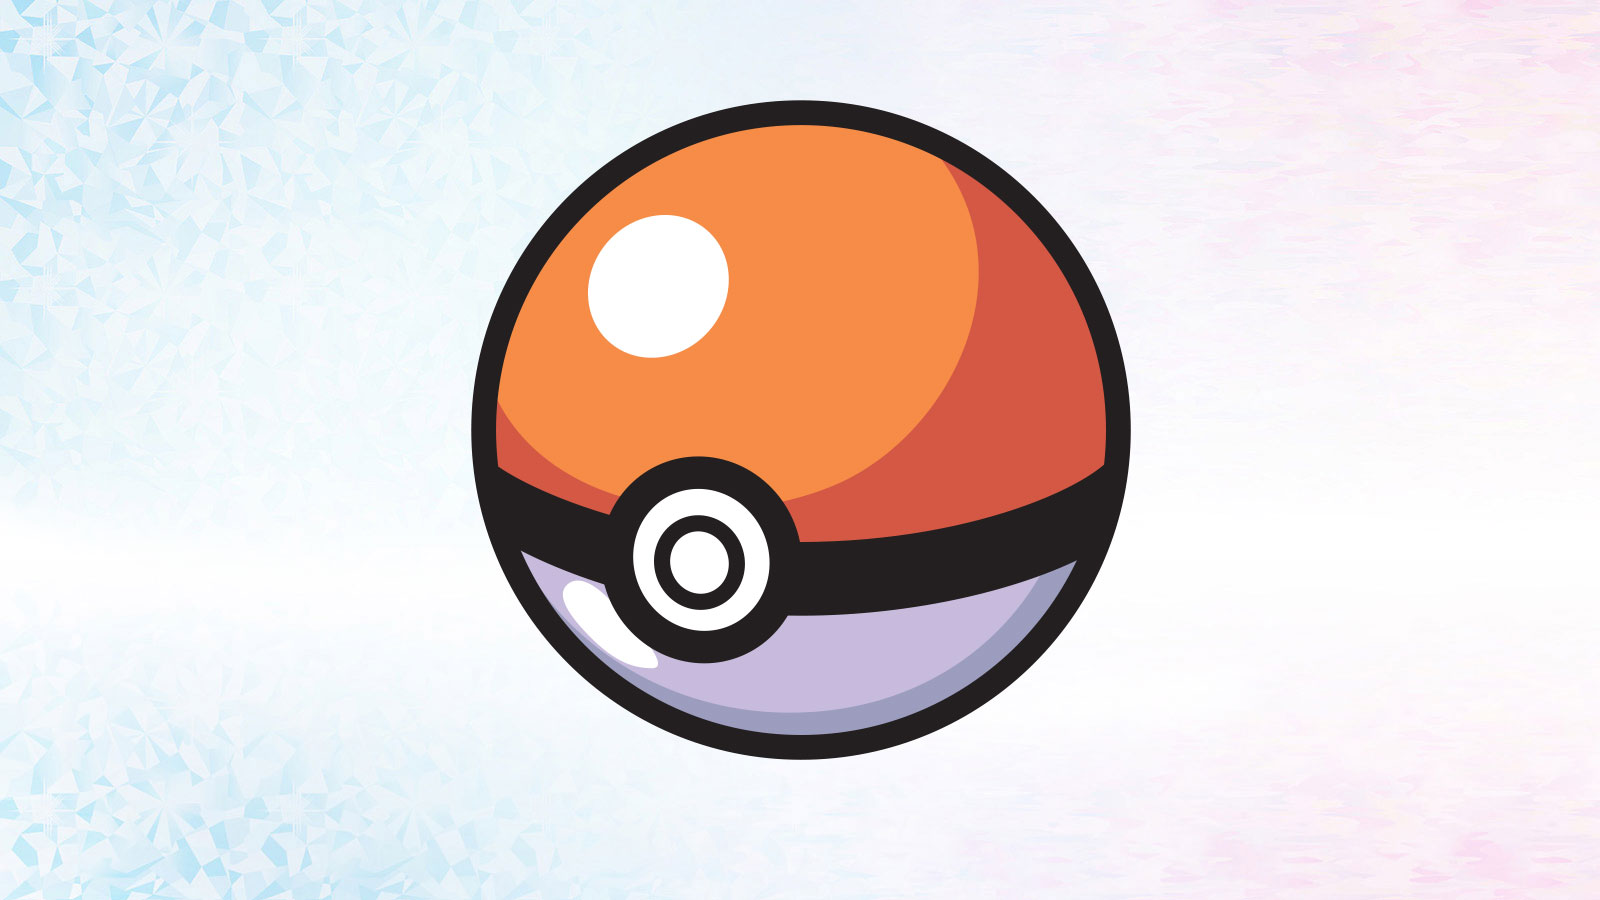 Pokémon Brilliant Diamond e Pokémon Shining Pearl, Bónus Poké Balls, Website oficial